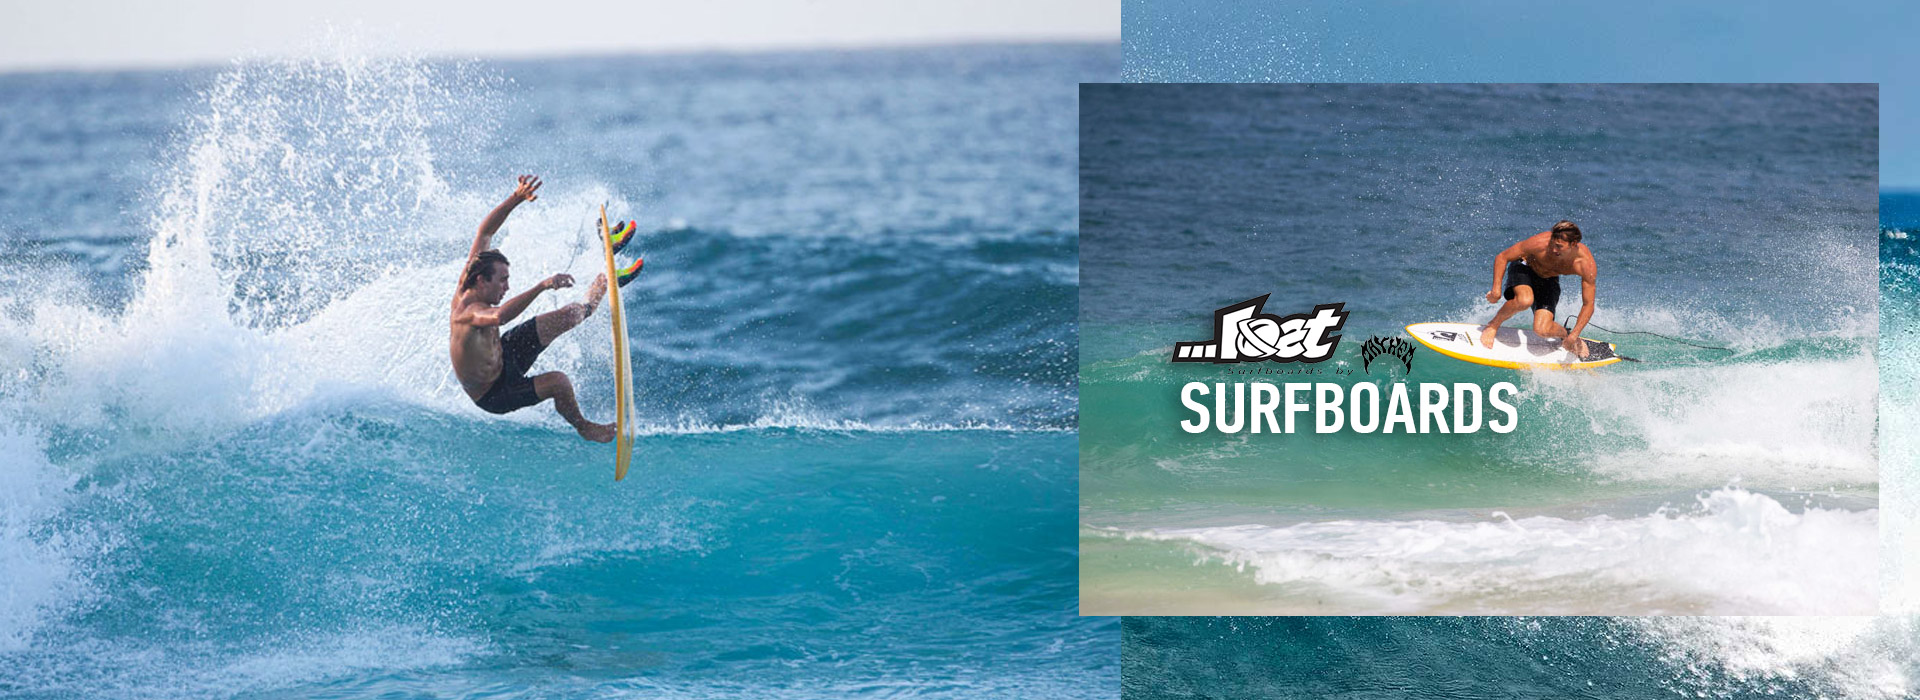 Lost-Surf-Slider_S-22